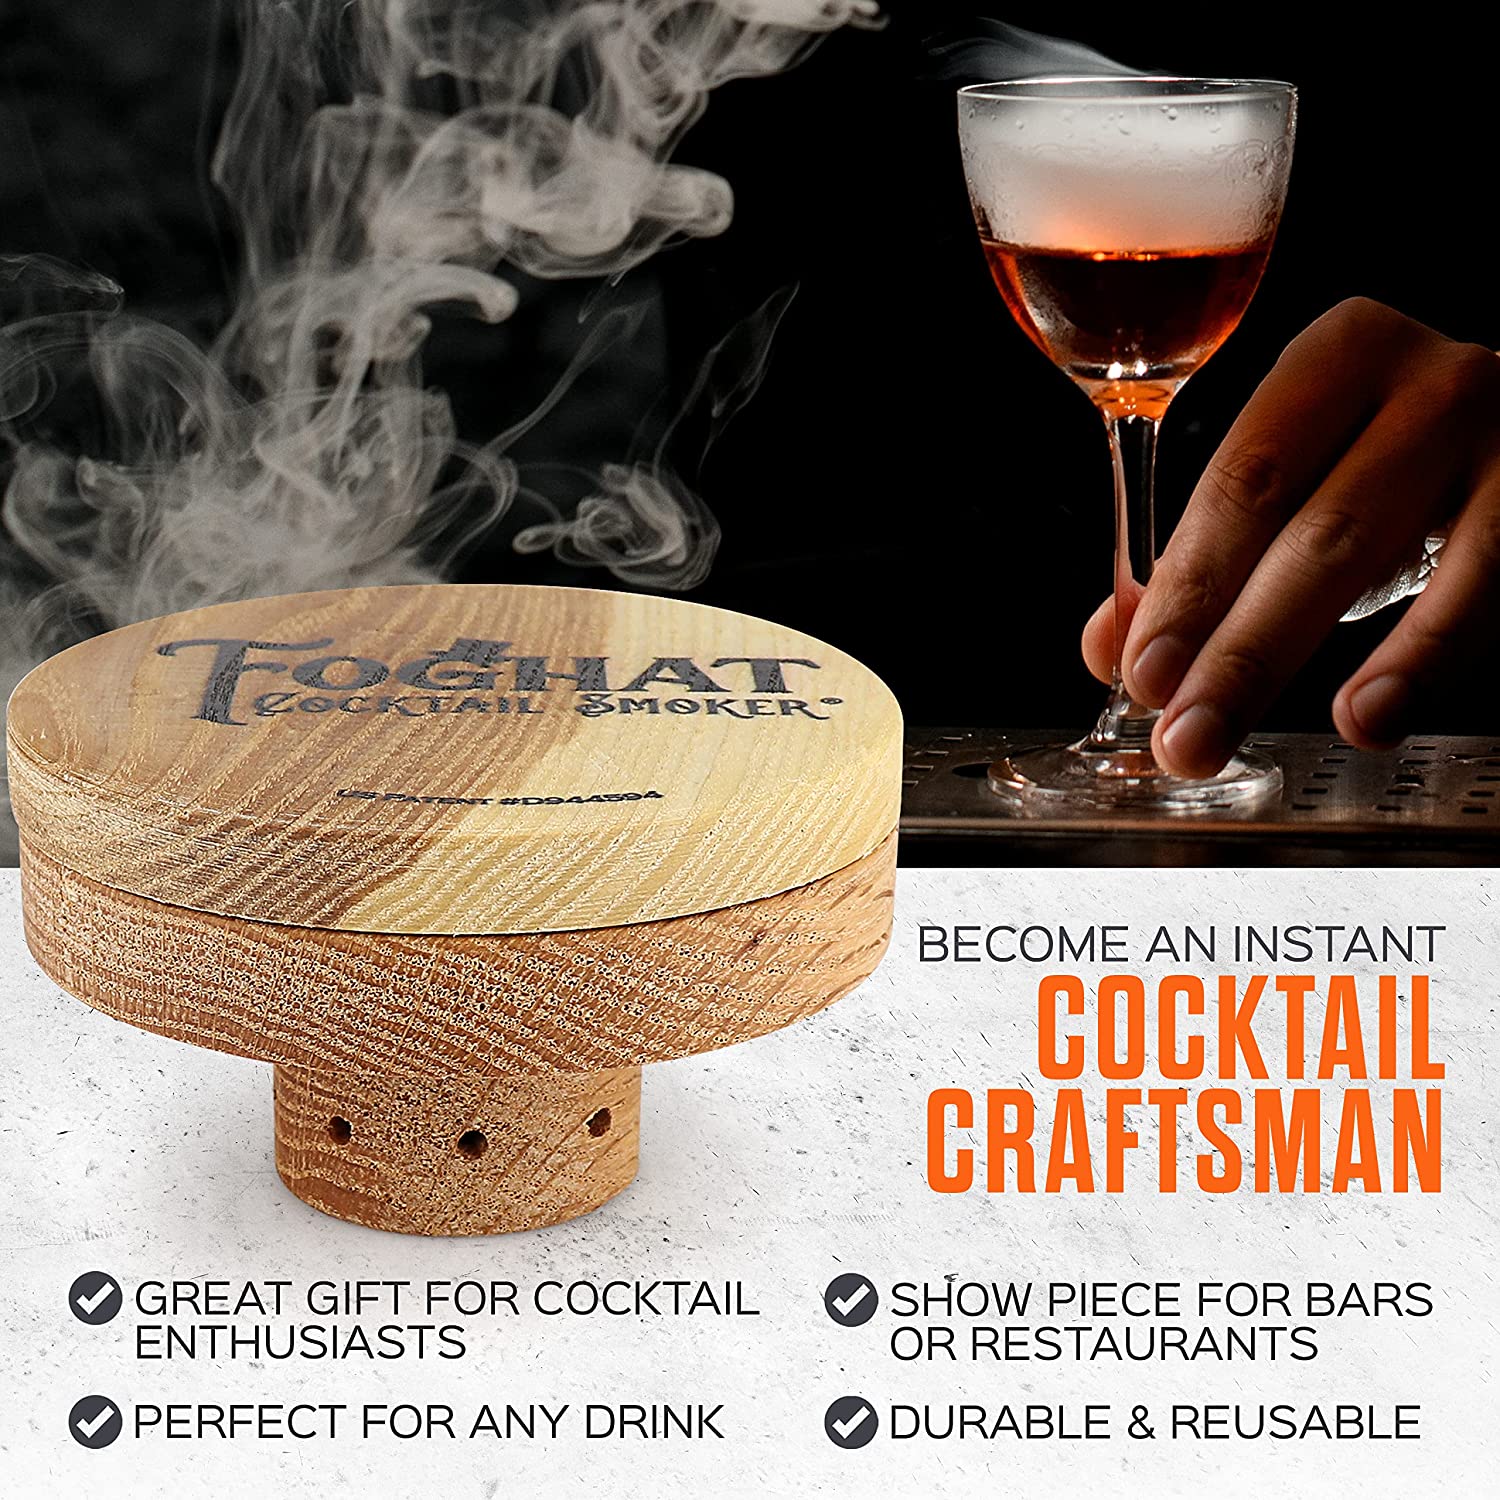 Foghat Cocktail Smoker Kit - BourbonTrek